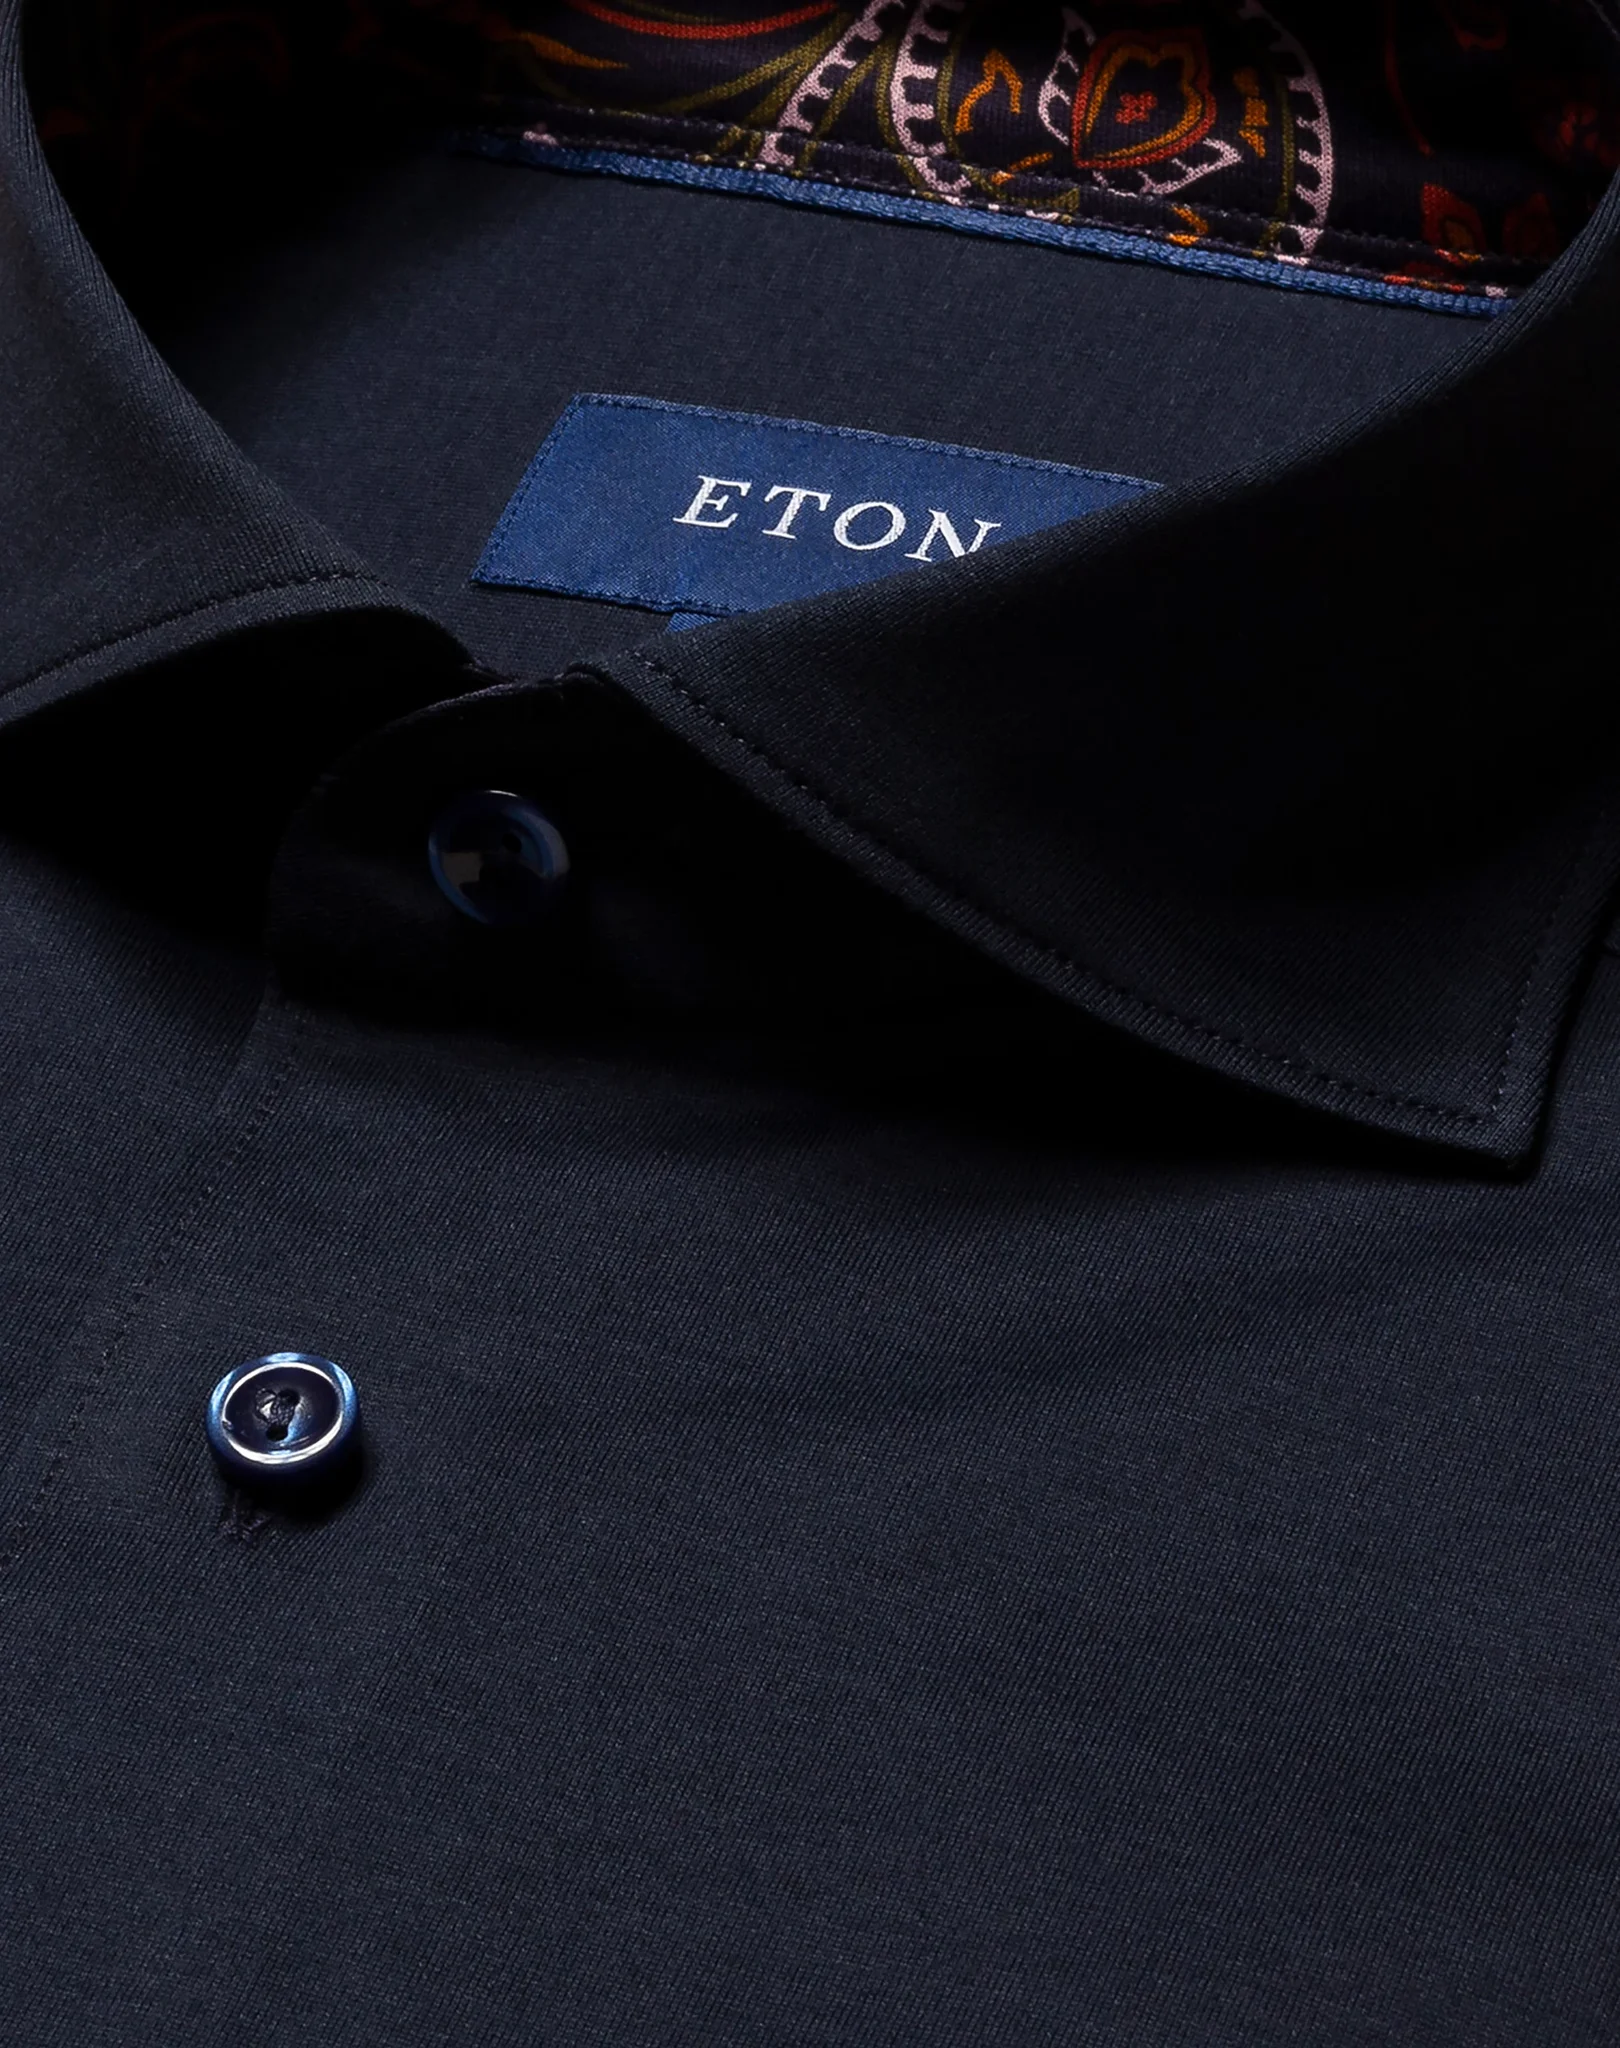 Eton - navy blue jersey widespread